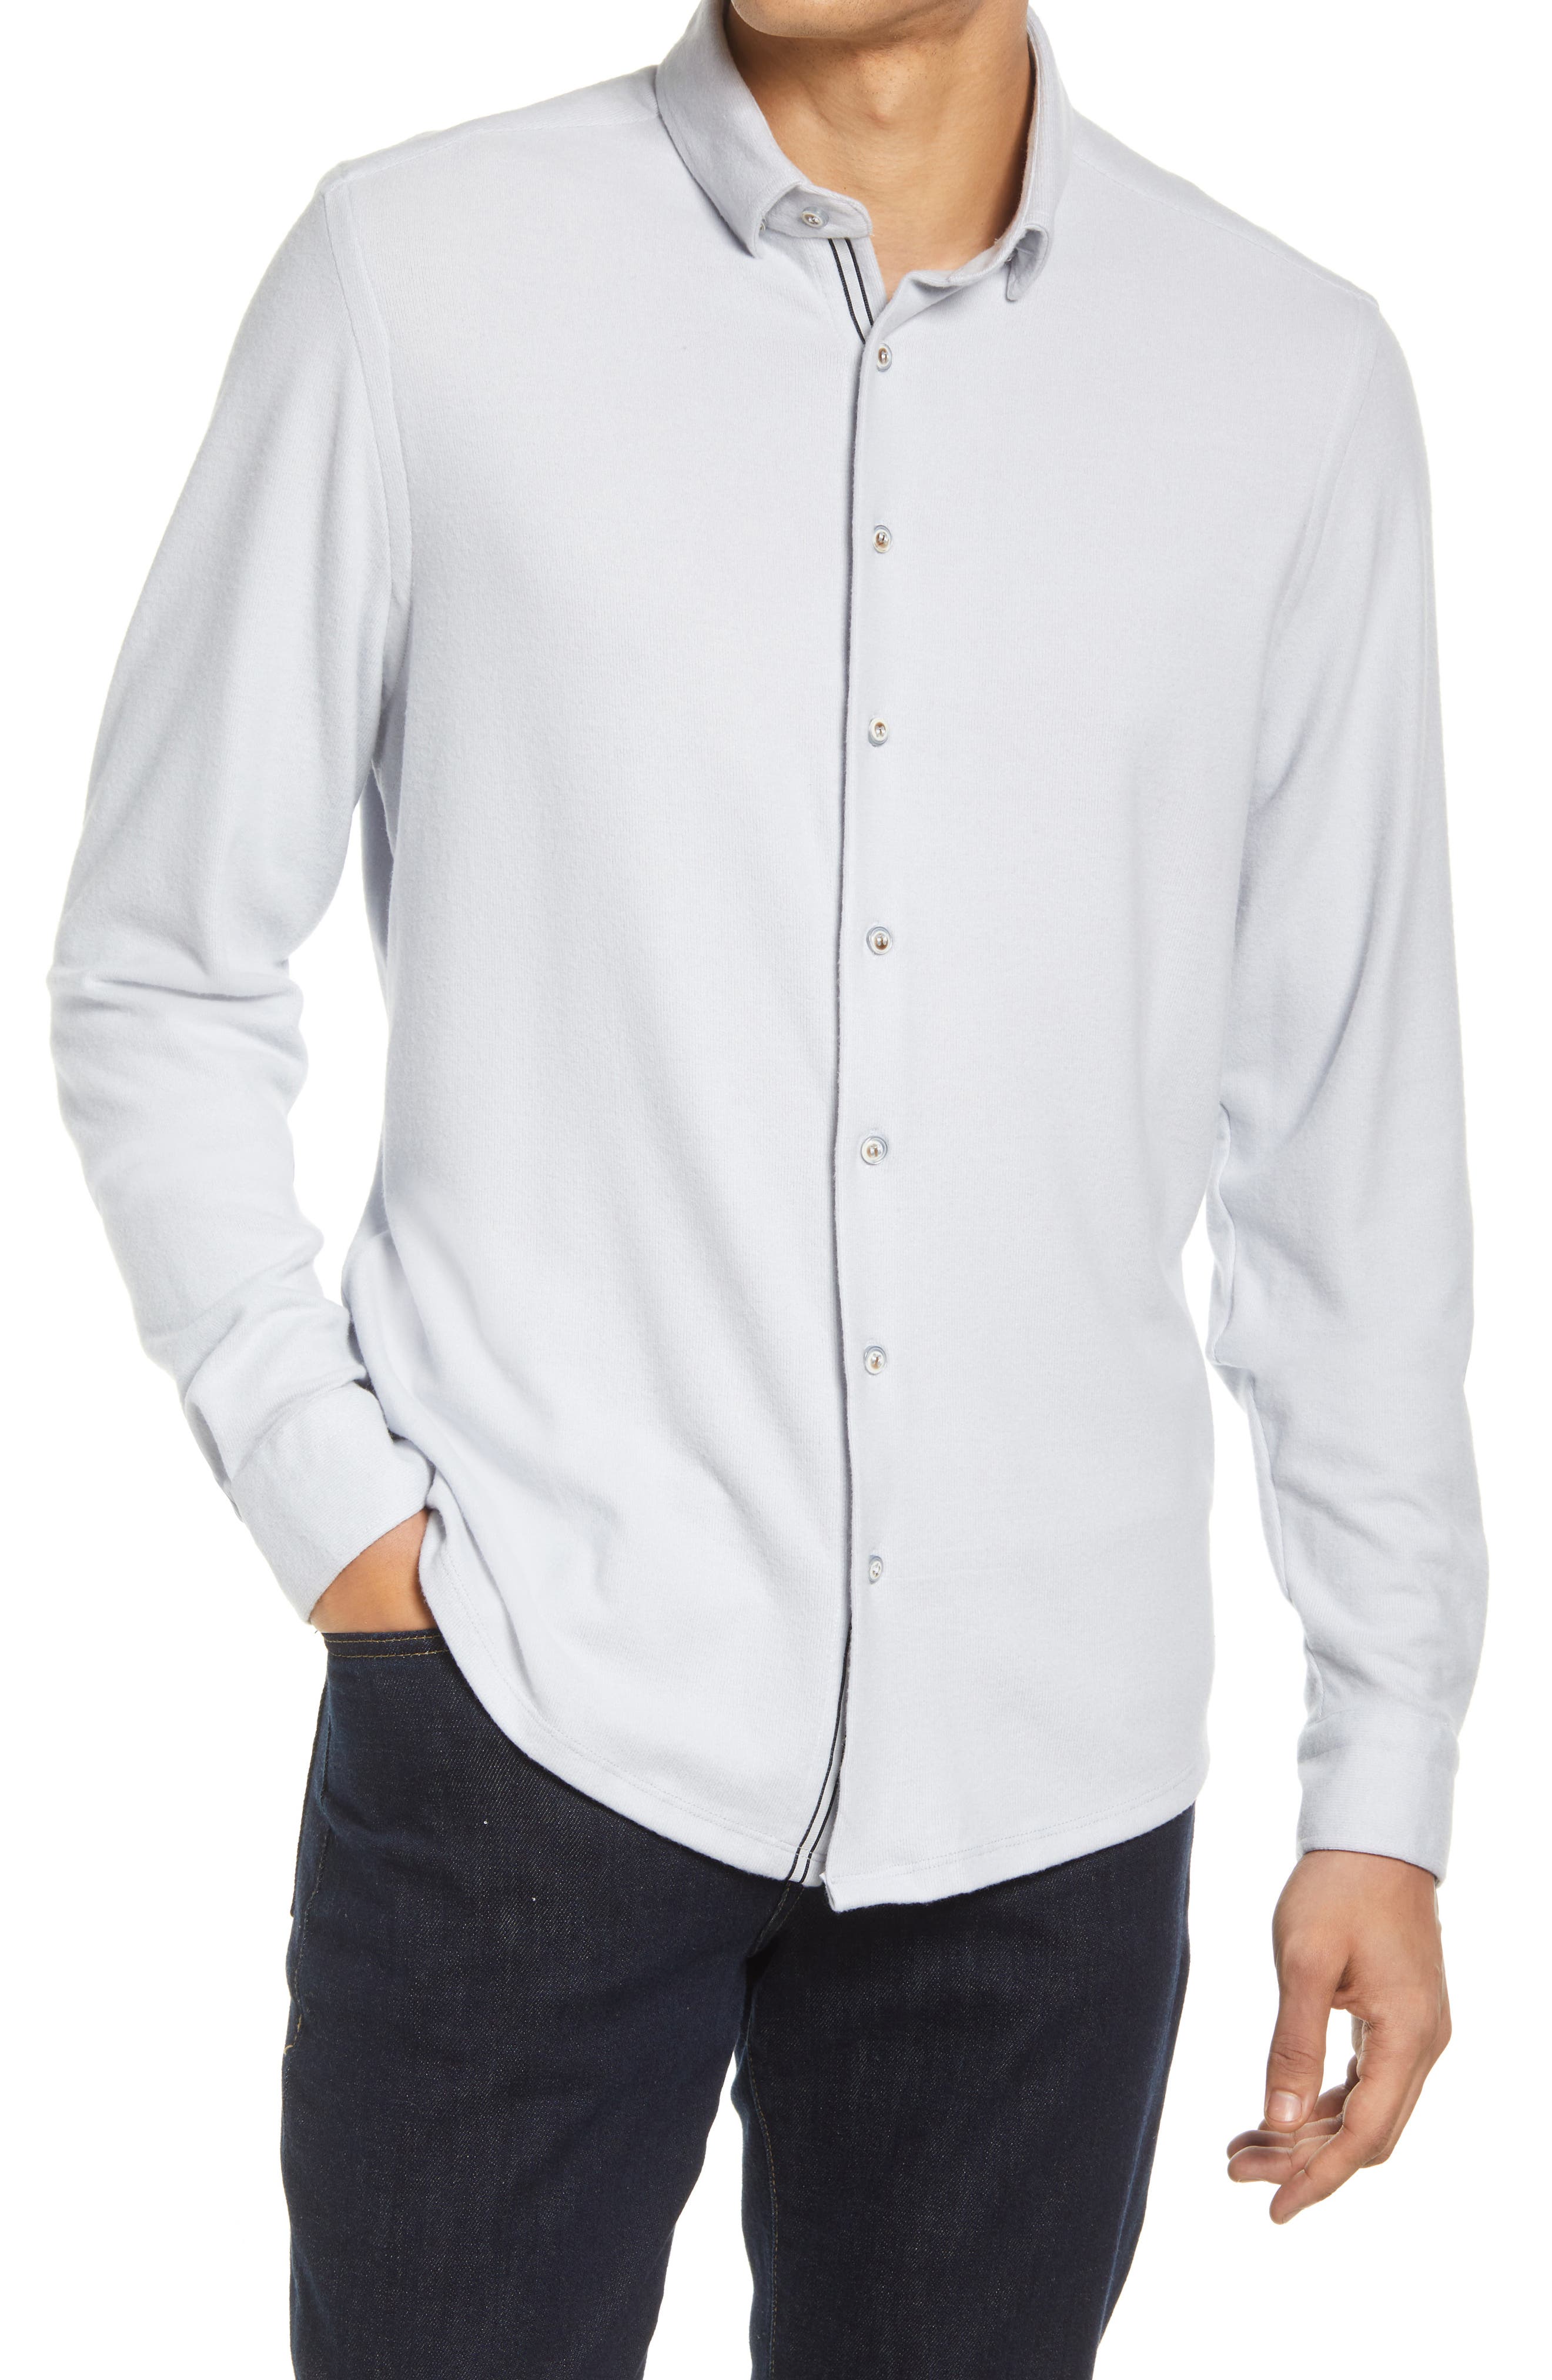 Hugo Boss Mens Elisha White Slim Fit 2 Ply Cotton Dress Shirt 15.5 34/35 